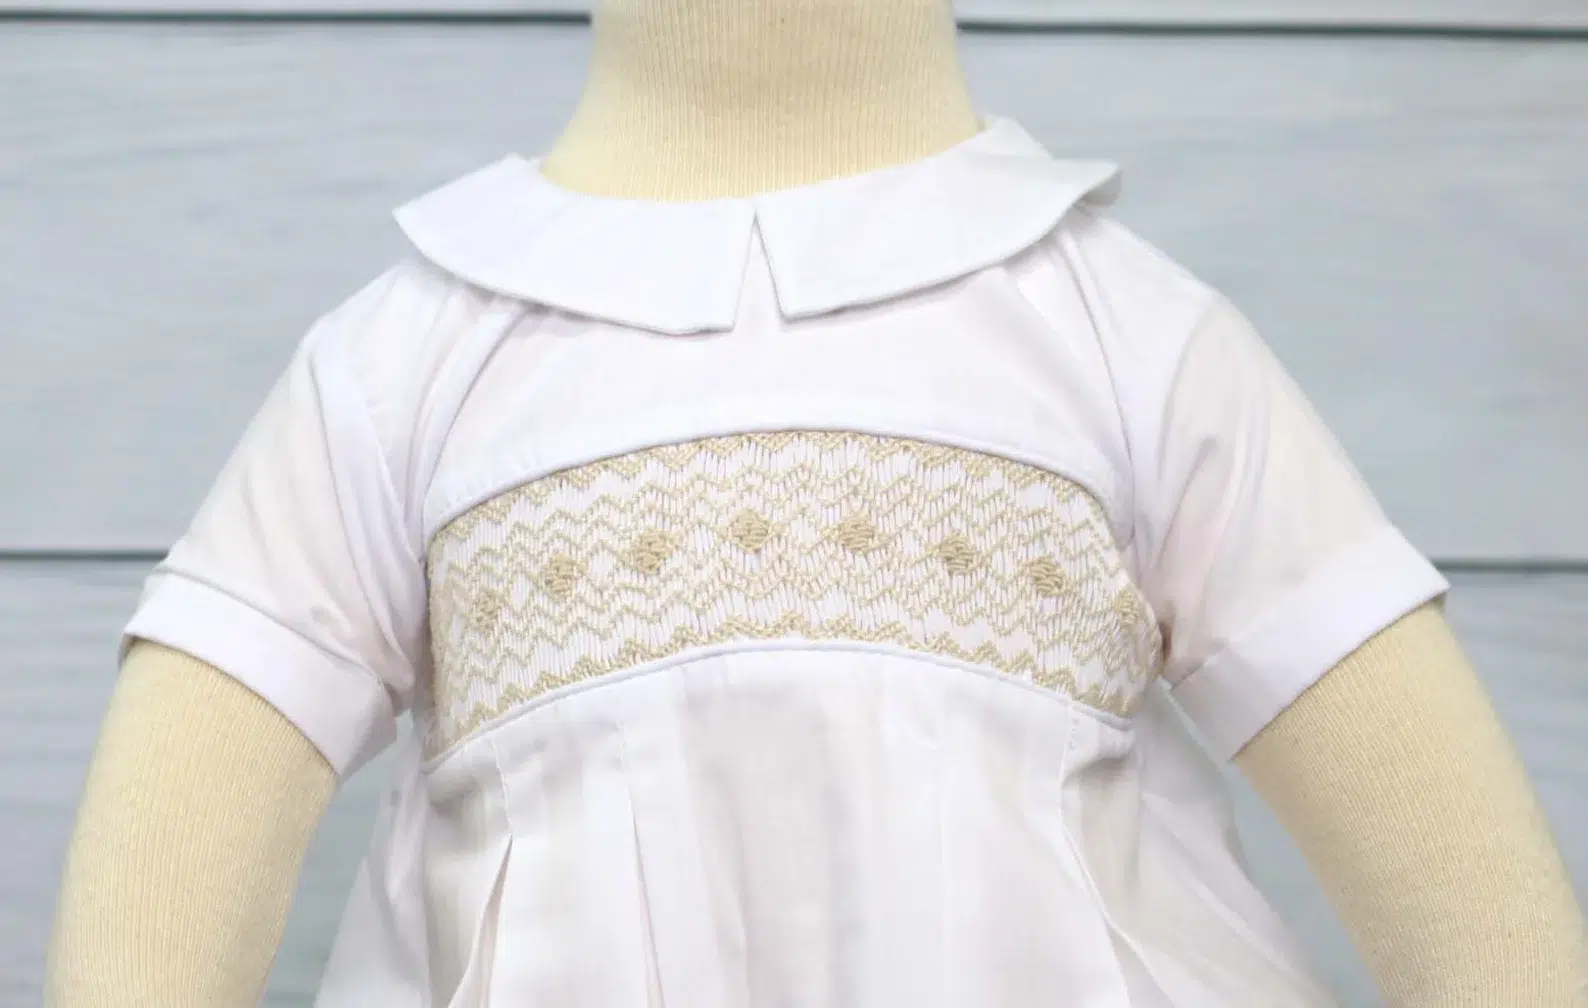 Smocked Bodysuit Easter Outfit for Boy Infant